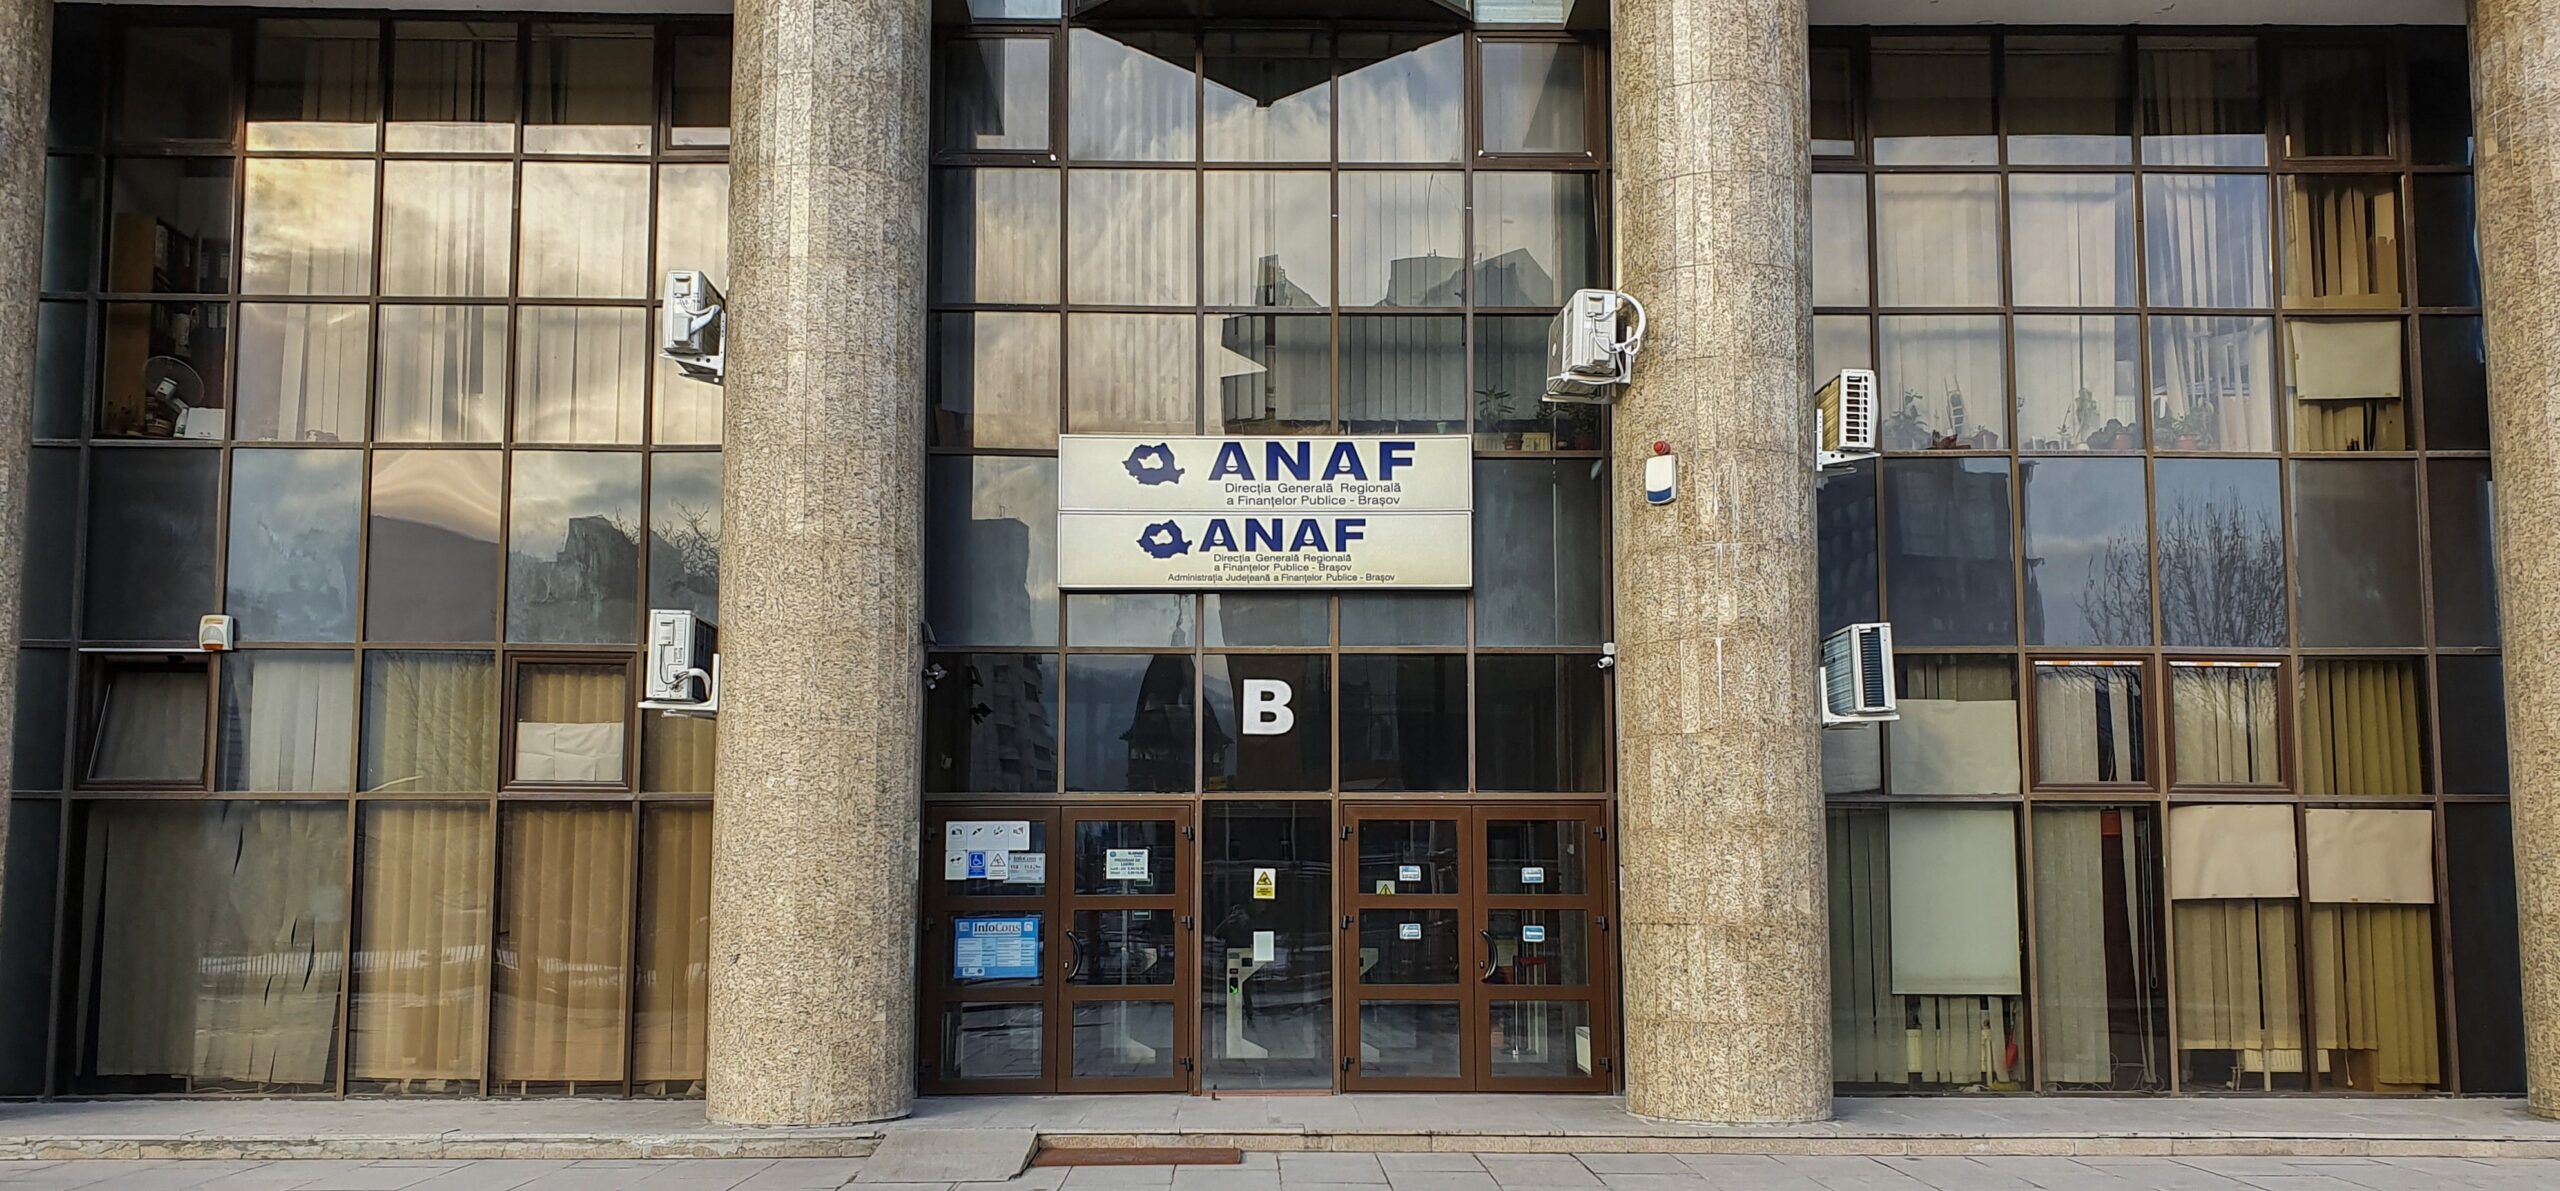 Big Data. Programul care va notifica românii cu datorii la ANAF